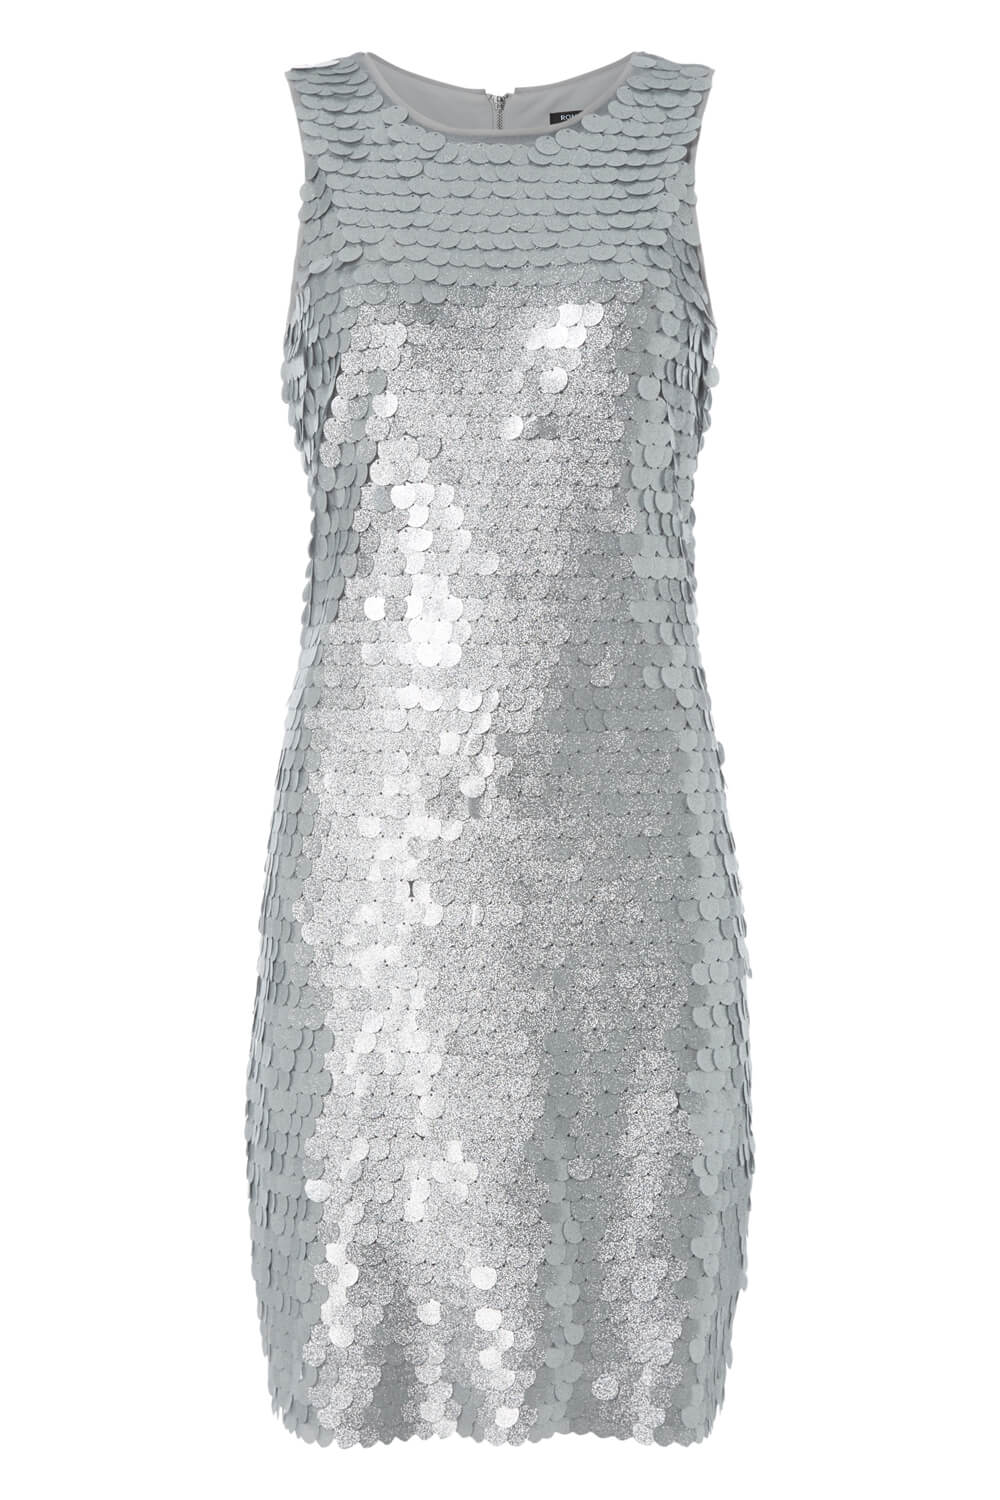 Sequin Shift Dress in Silver - Roman Originals UK